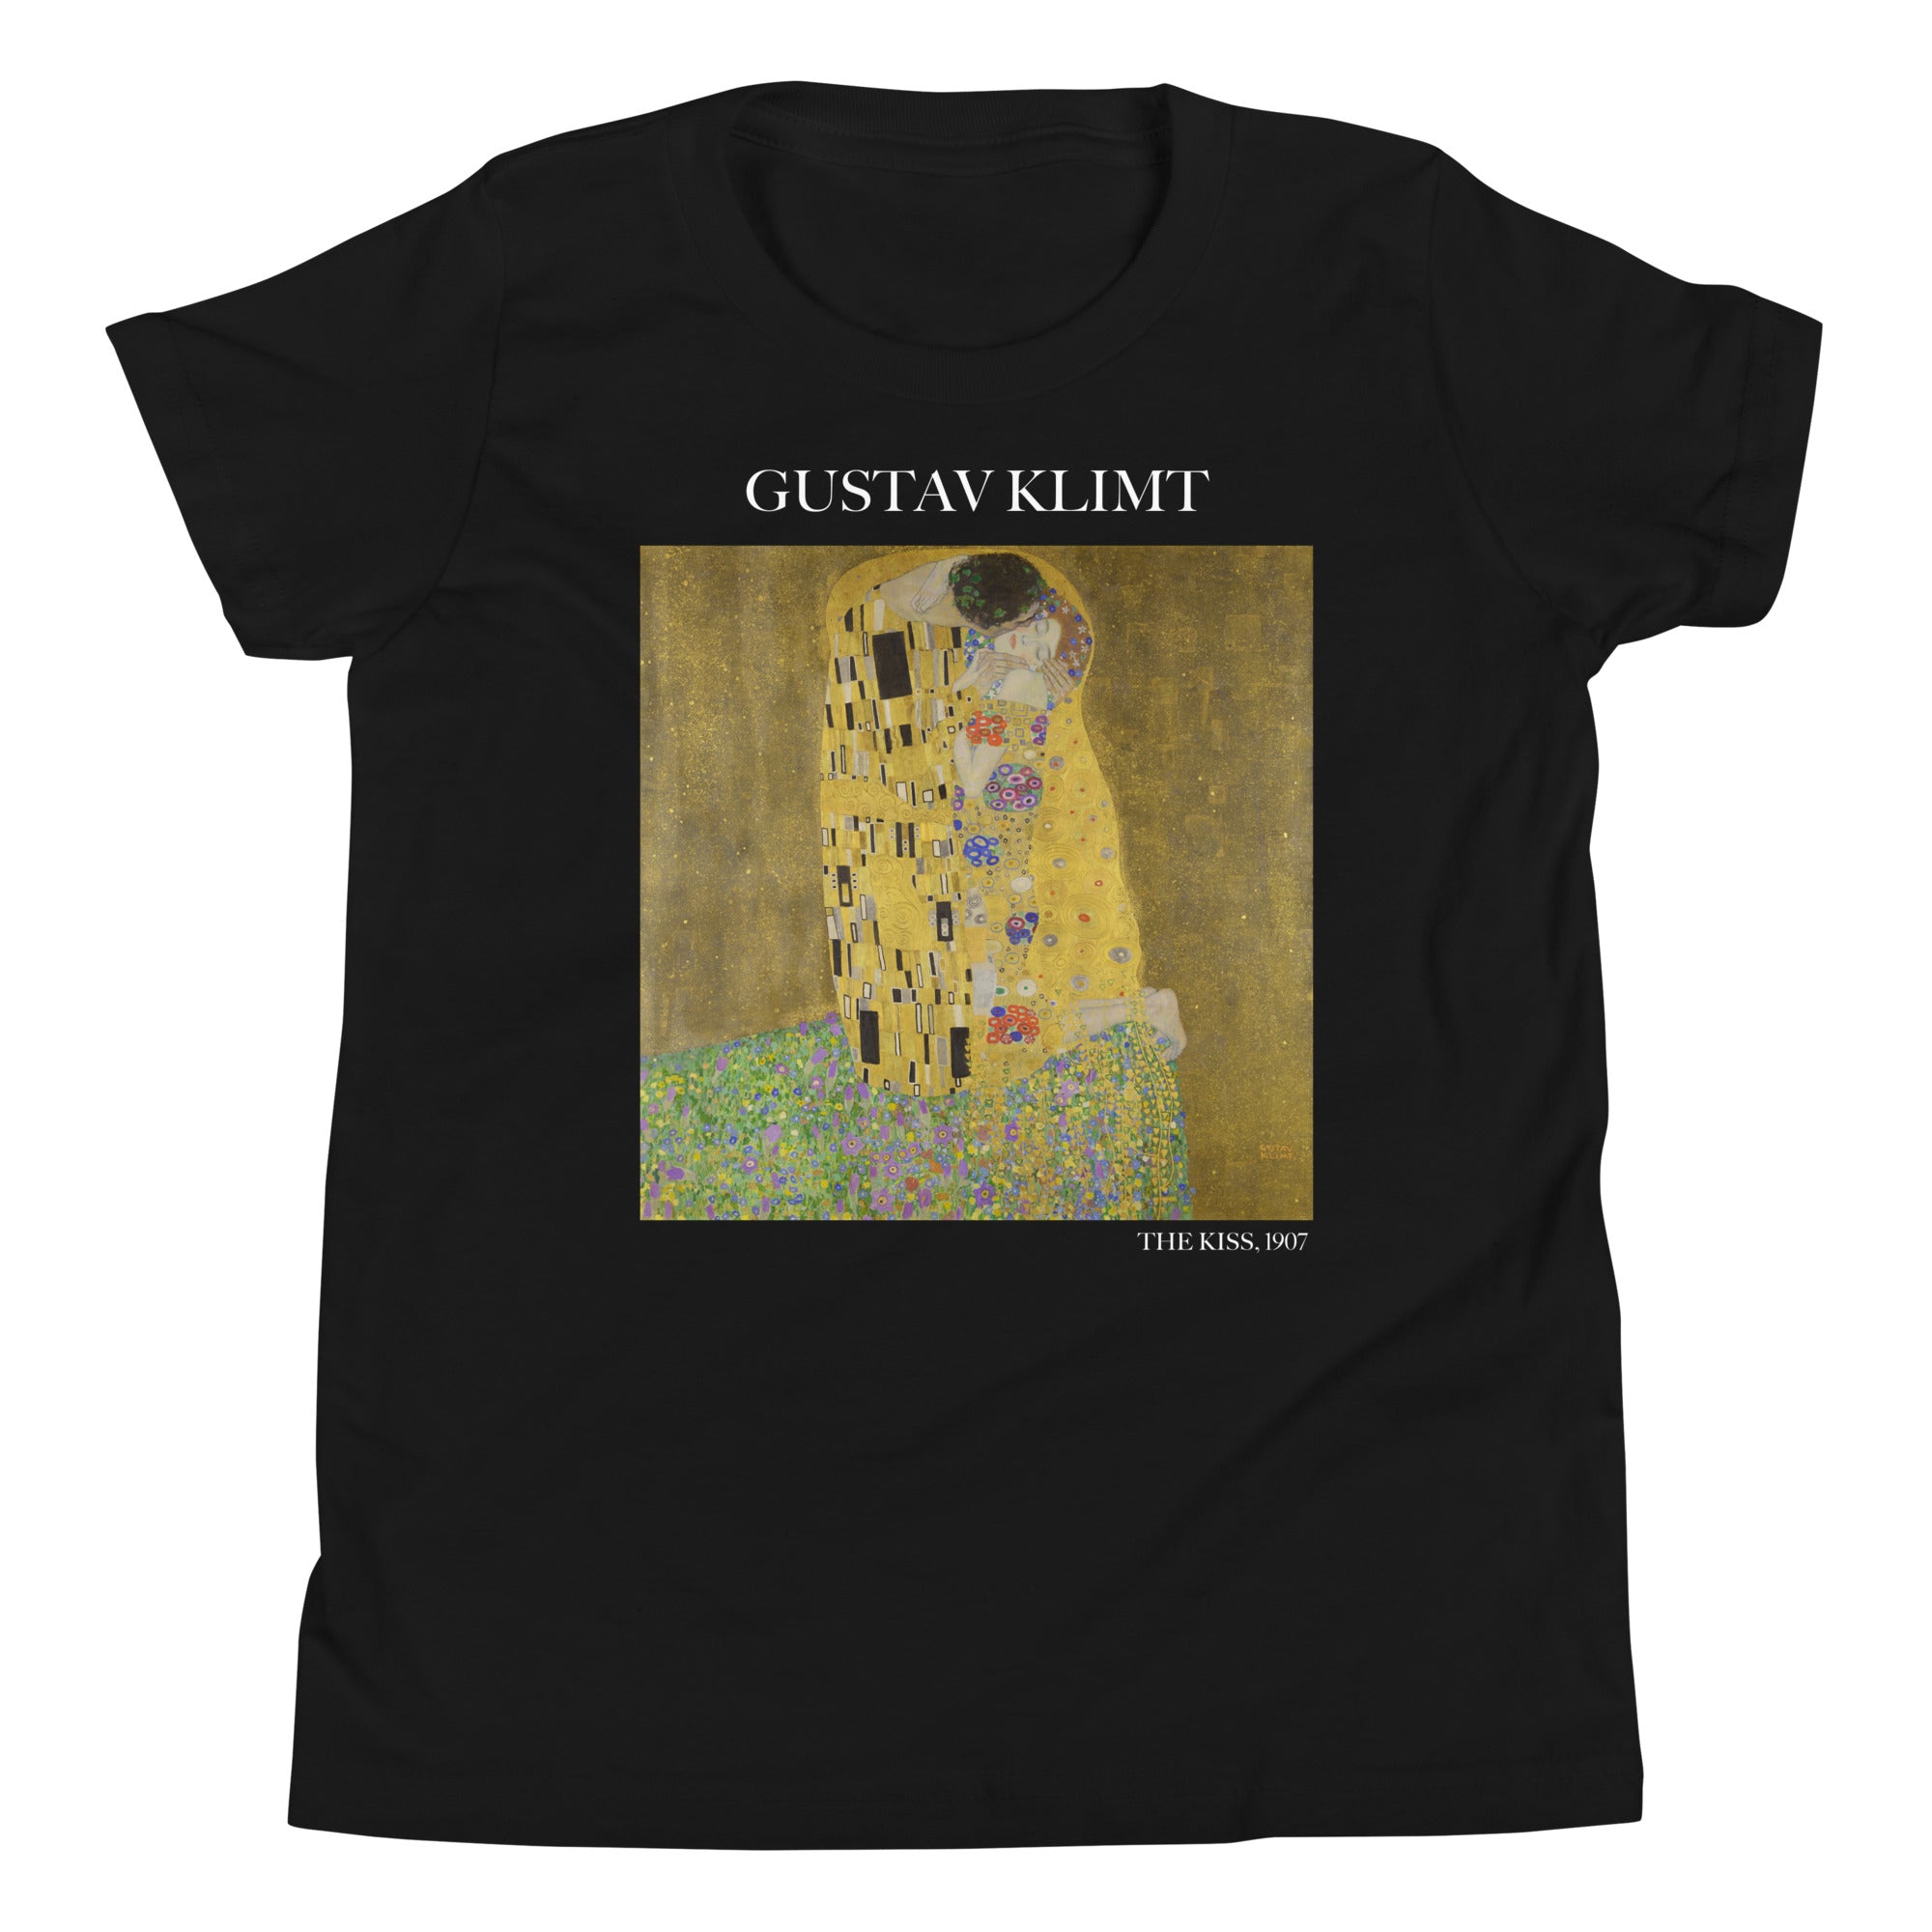 Gustav Klimt 'The Kiss' Famous Painting Short Sleeve T-Shirt | Premium Youth Art Tee